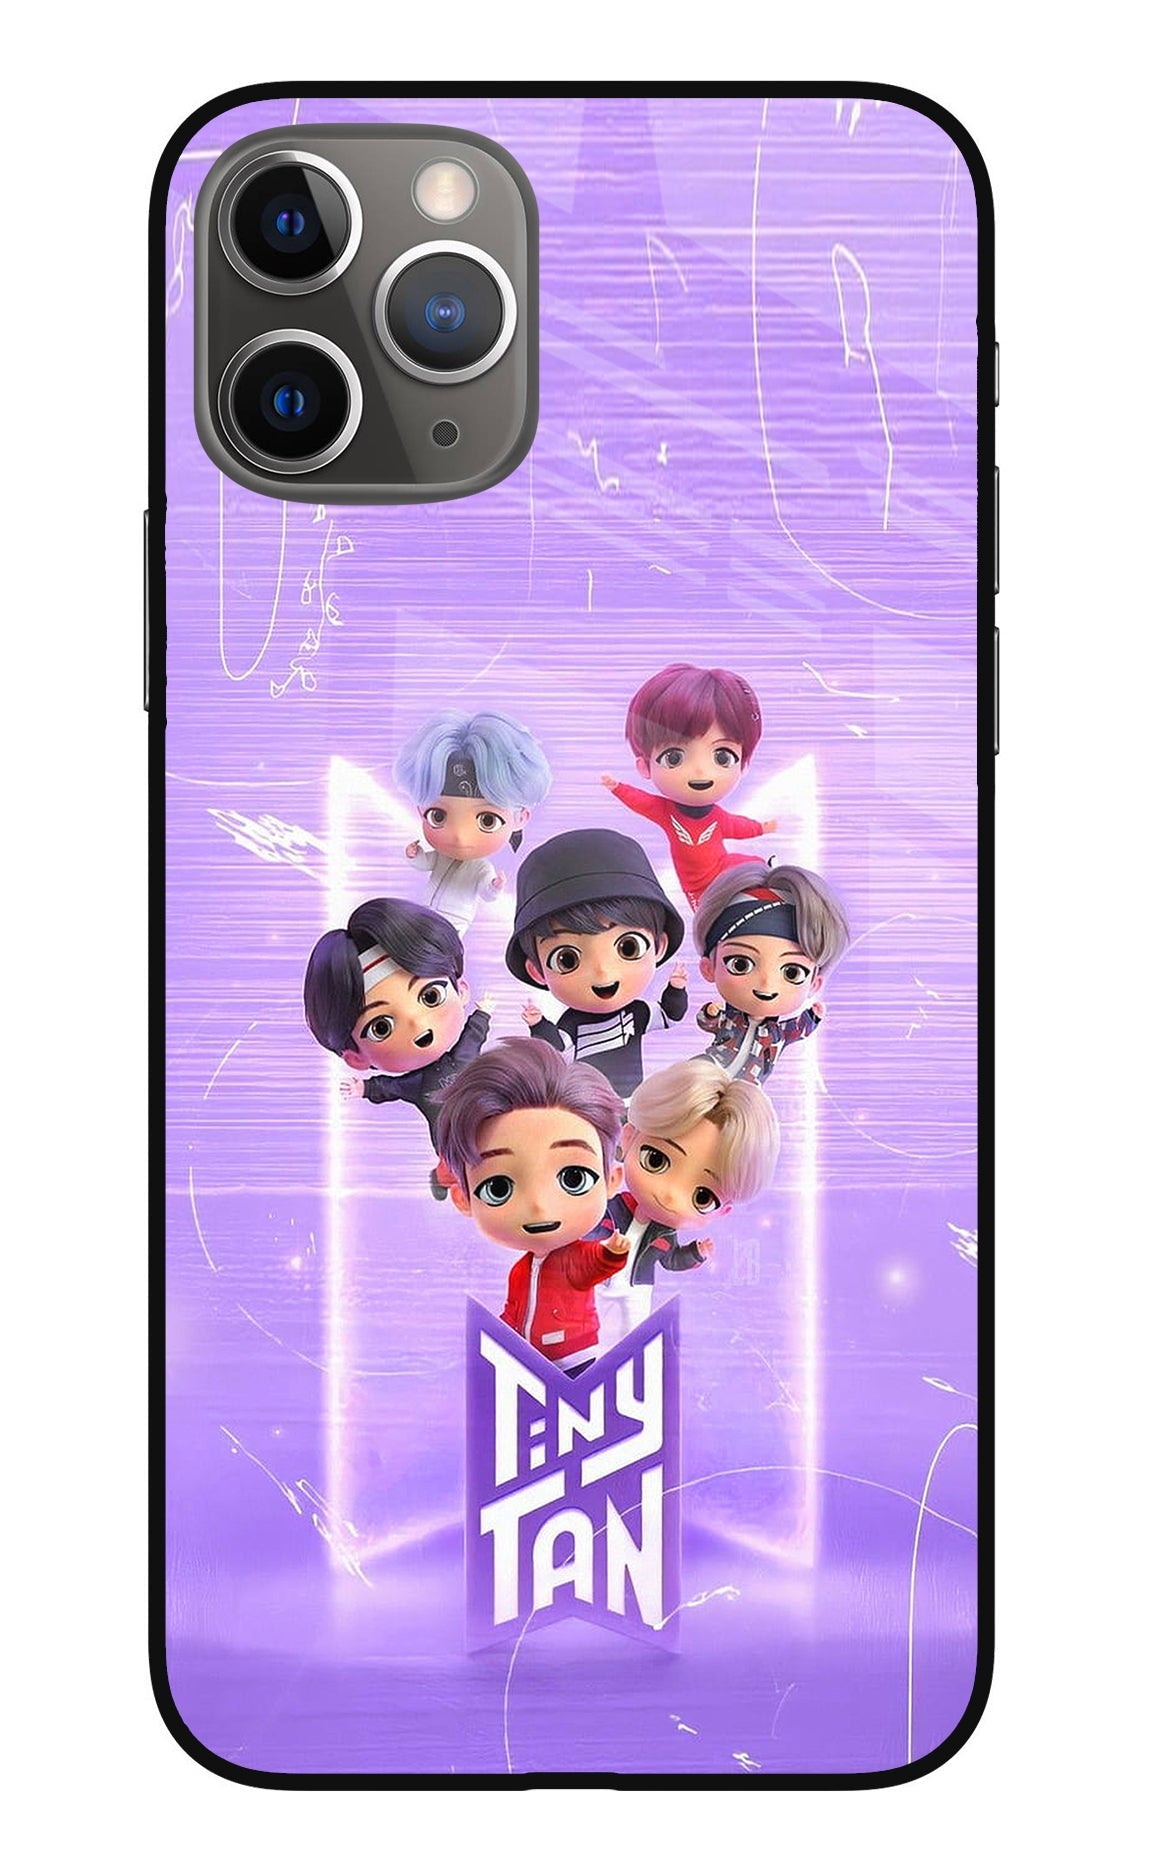 BTS Tiny Tan iPhone 11 Pro Max Glass Case